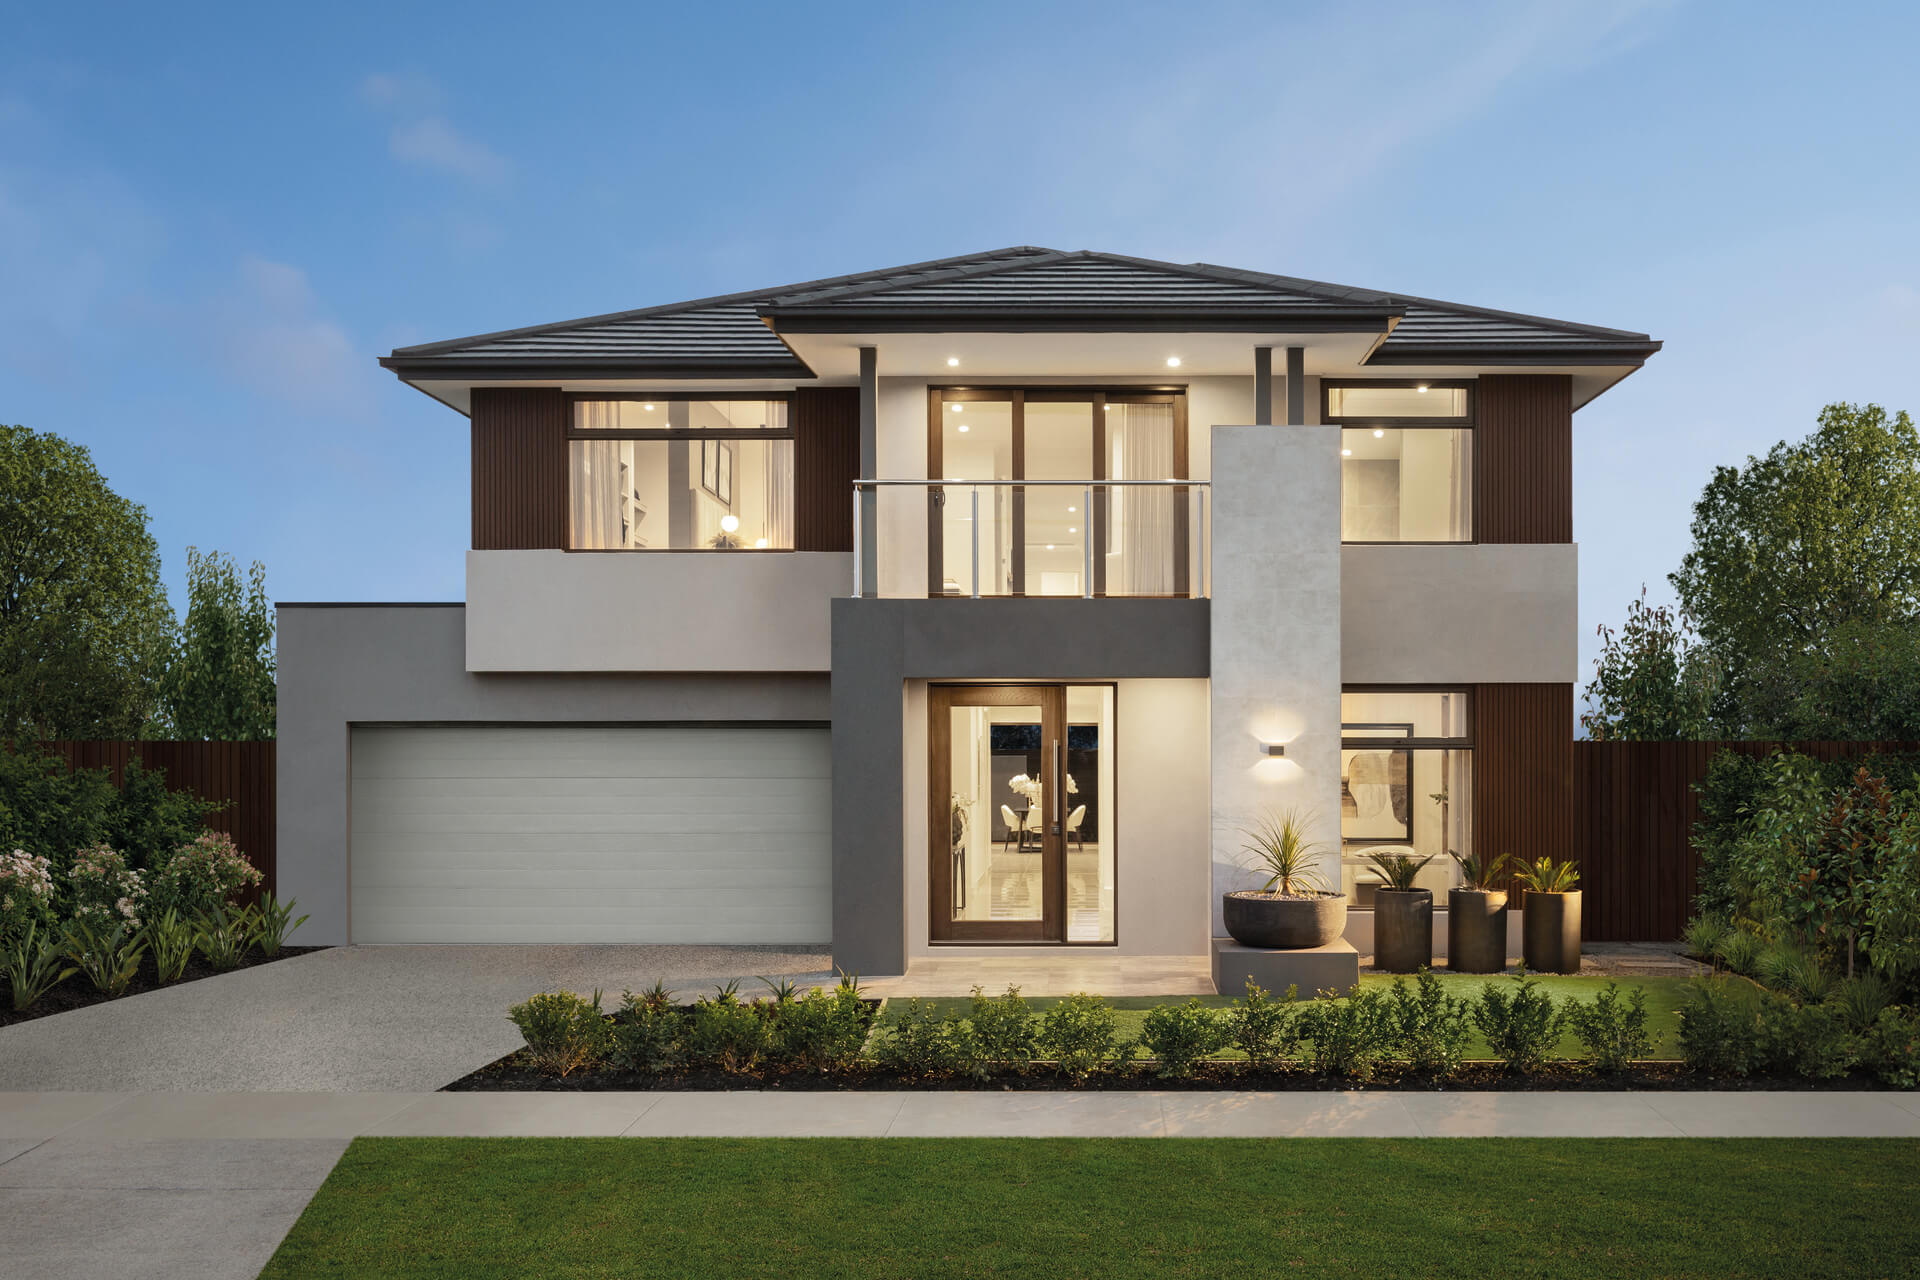 Double Storey Home Plans | Australia's No.1 Home Builder